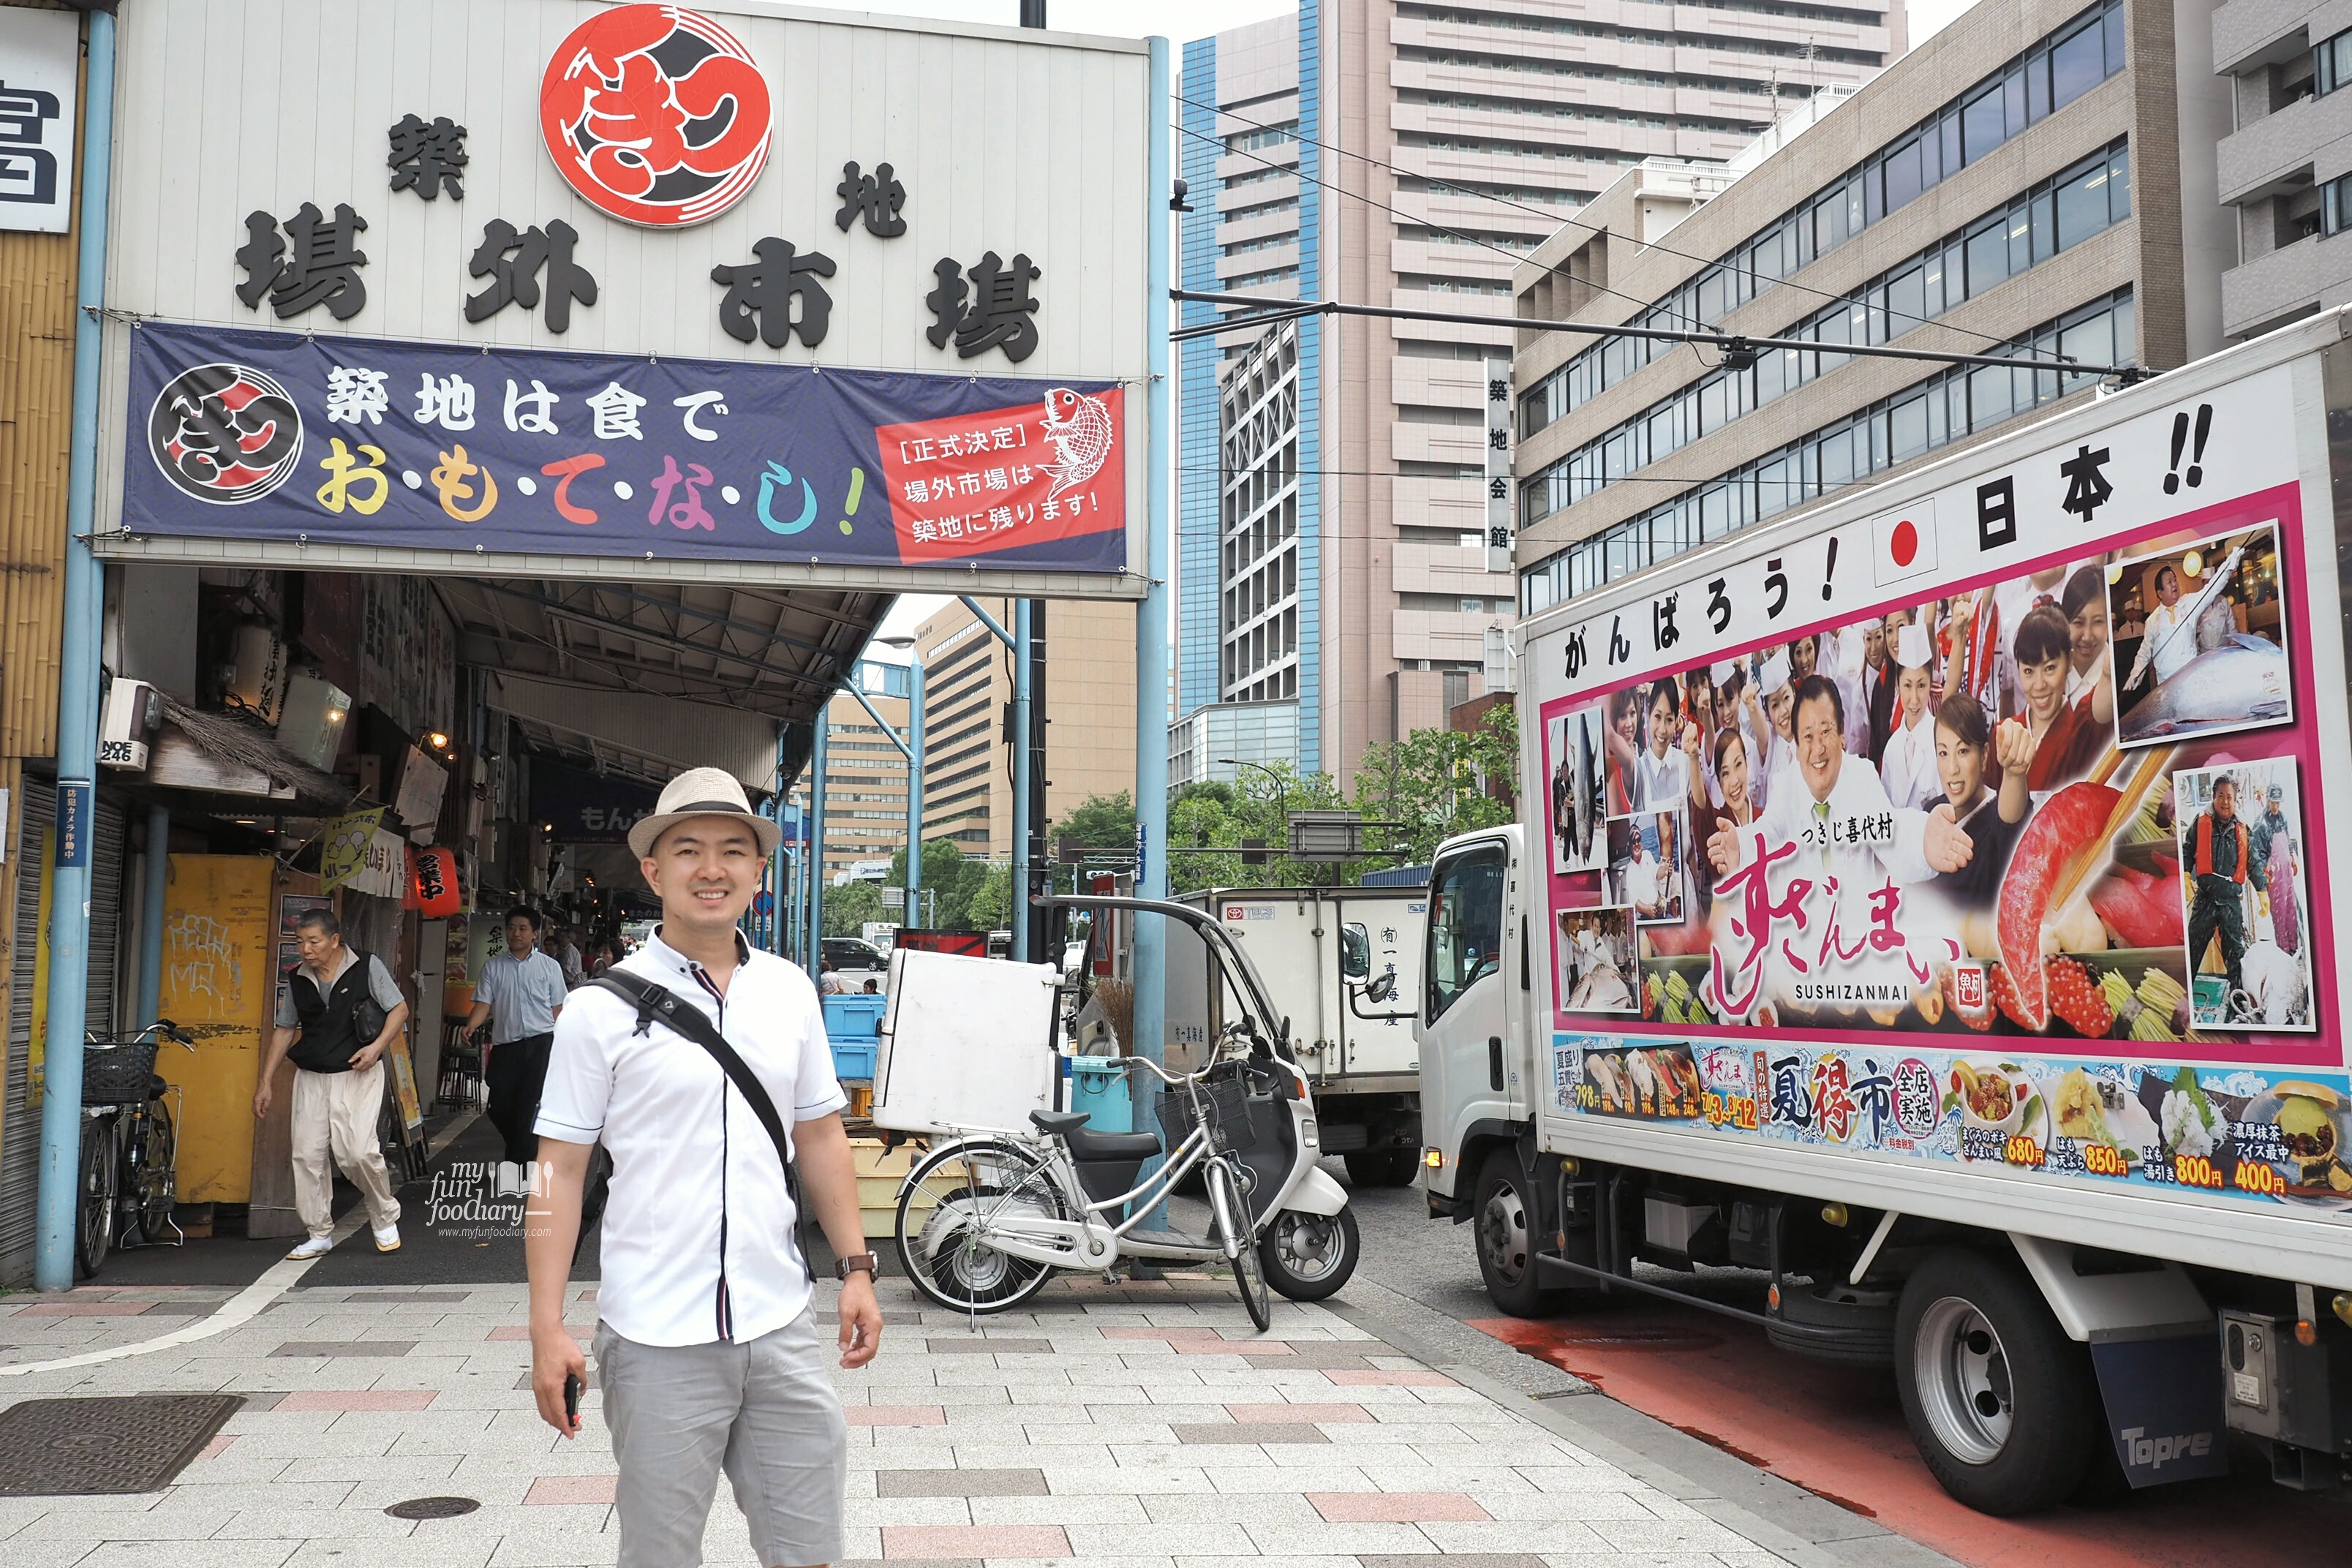 Andy before leaving the Tsukiji Market by Myfunfoodiary